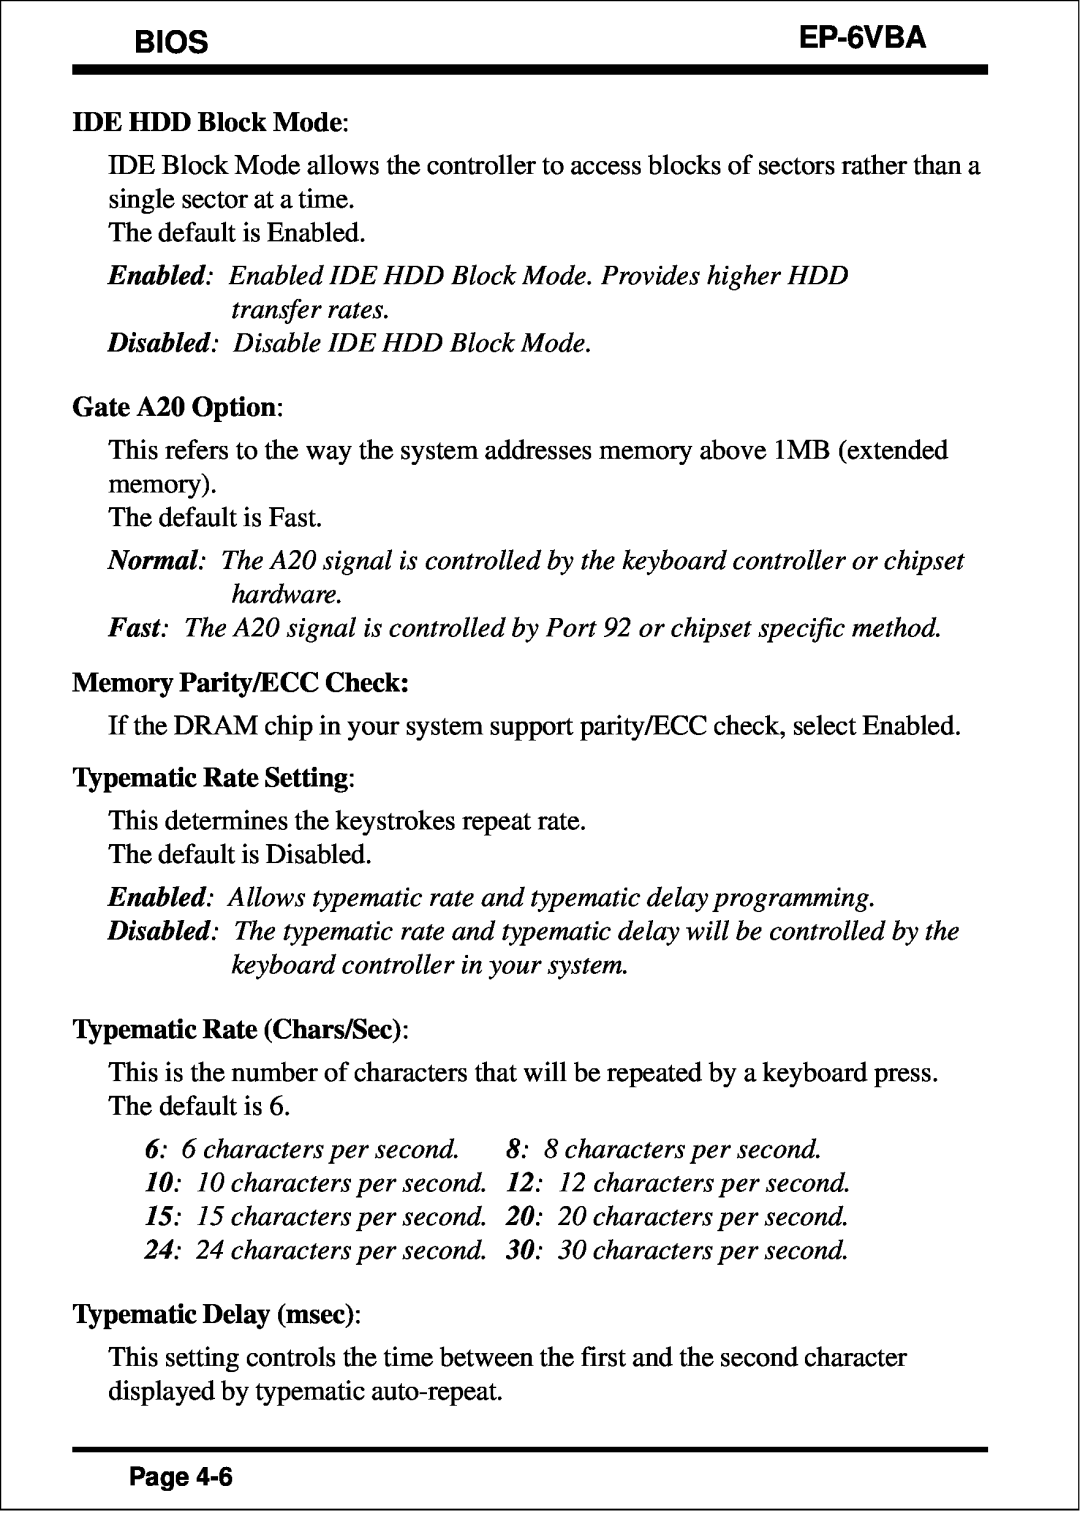 EPoX Computer EP-6VBA Bios, IDE HDD Block Mode, Gate A20 Option, Memory Parity/ECC Check, Typematic Rate Setting 